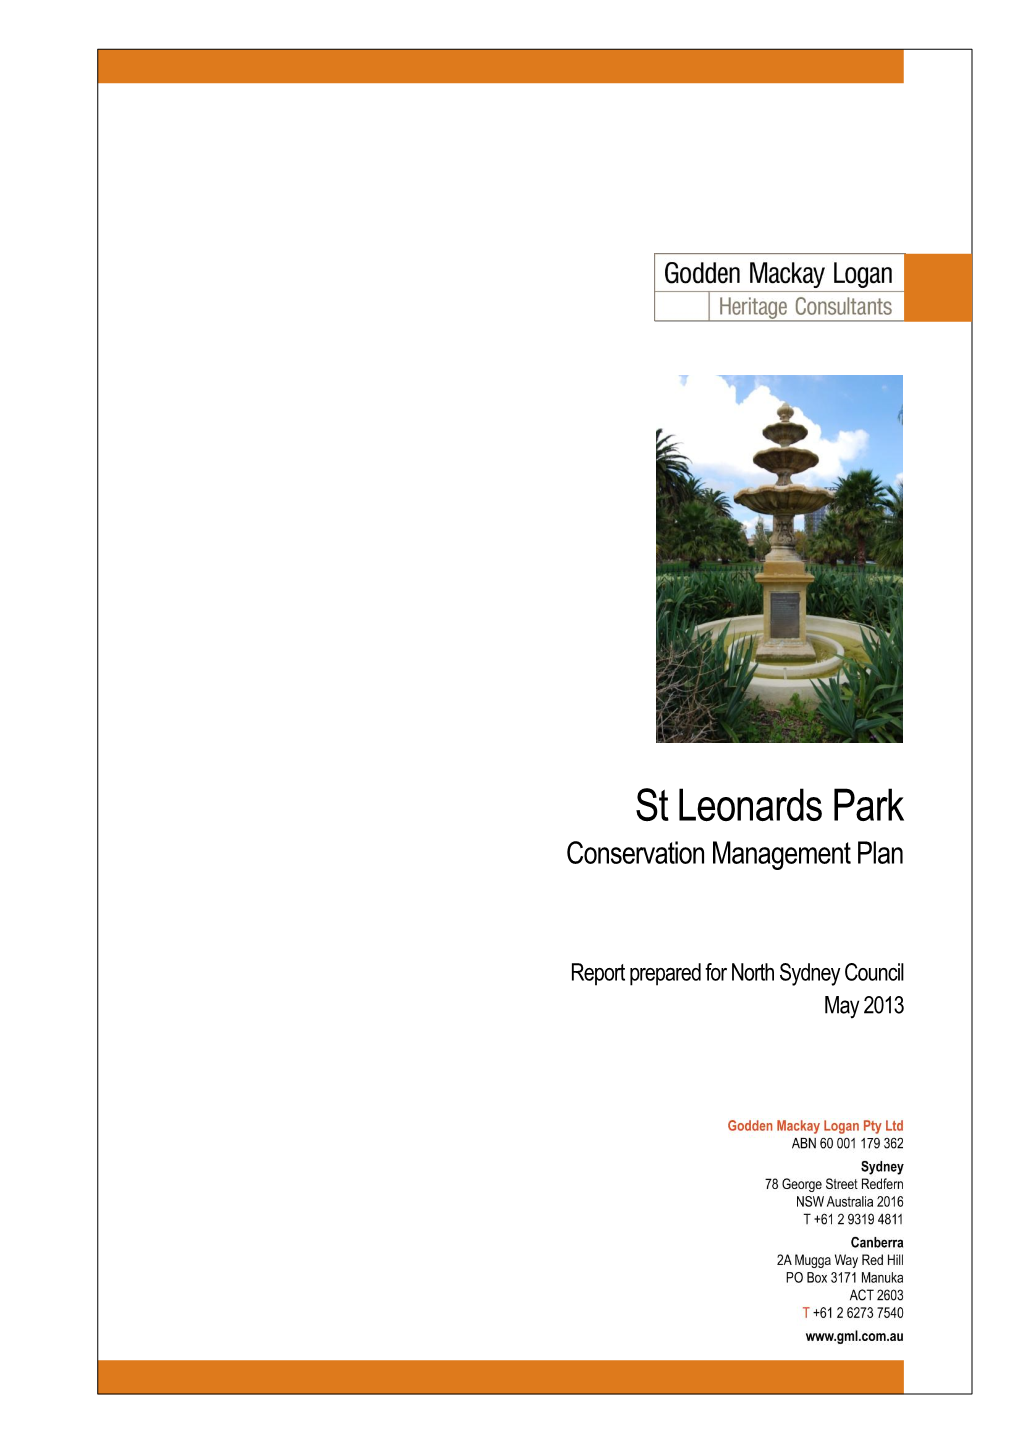 St Leonards Park Conservation Management Plan